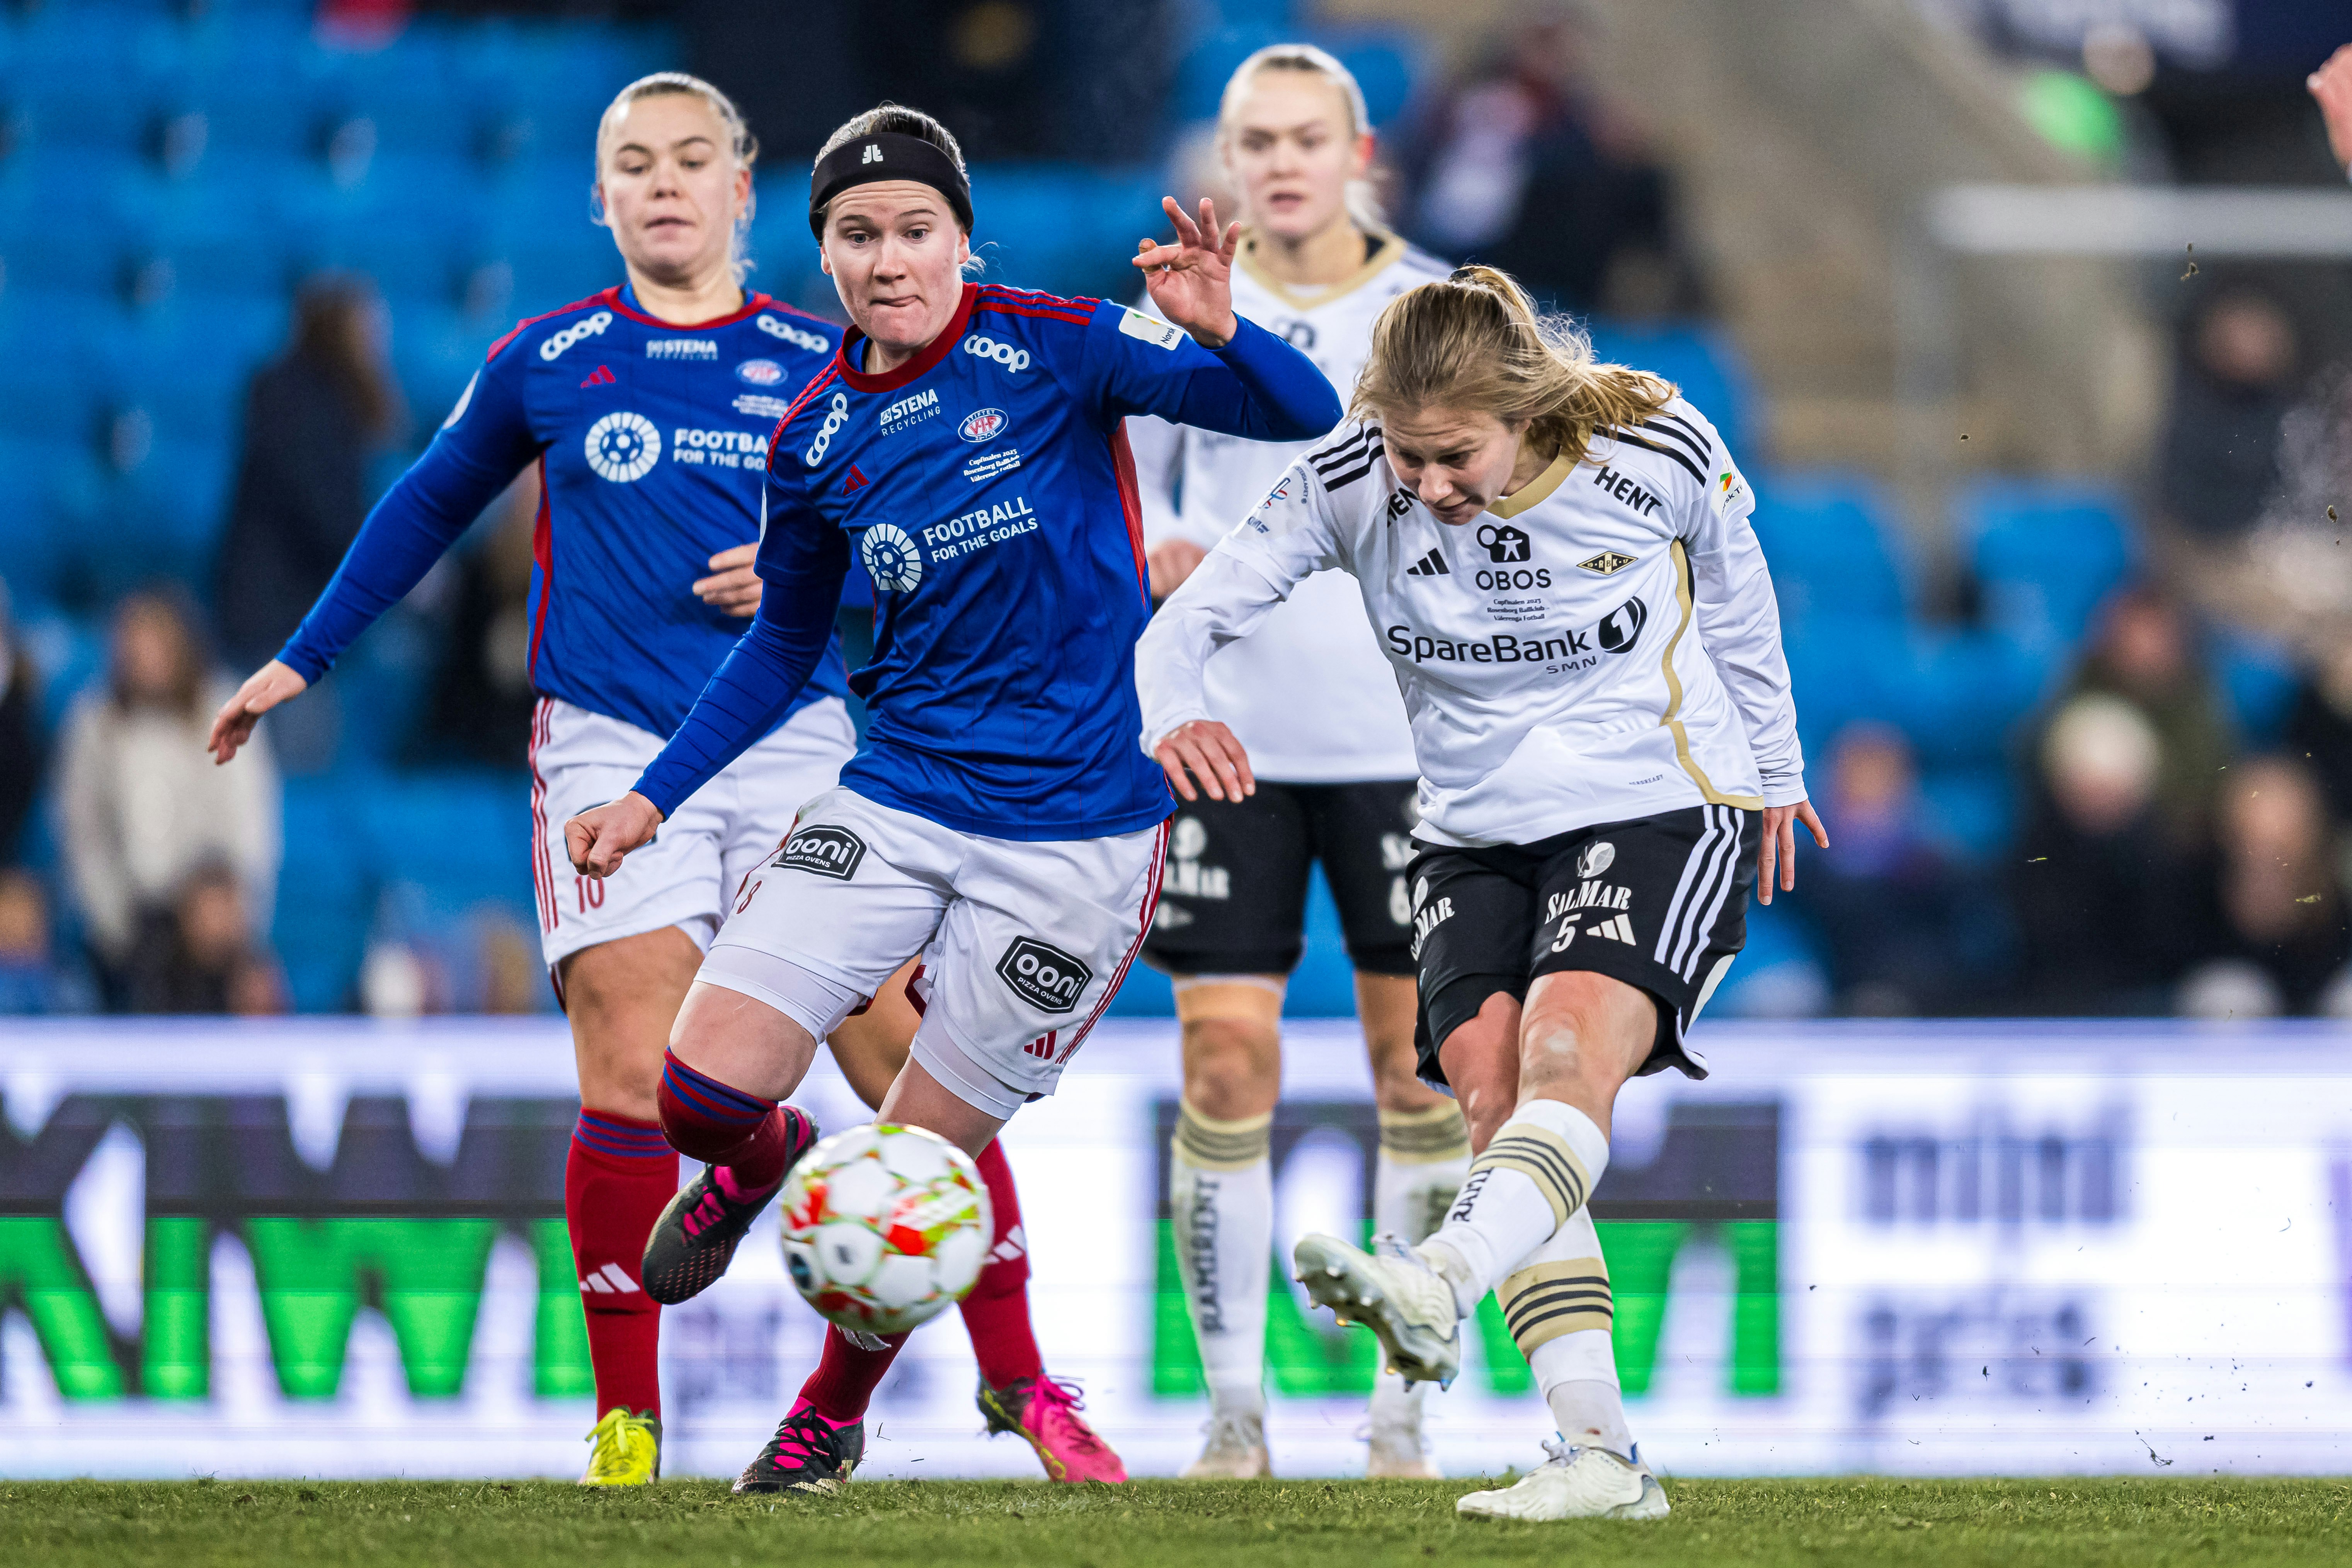 231125 Cesilie Andreassen of Rosenborg scores the 1-0 goal during the cup final between Rosenborg and Vålerenga on November 25, 2023 in Oslo.